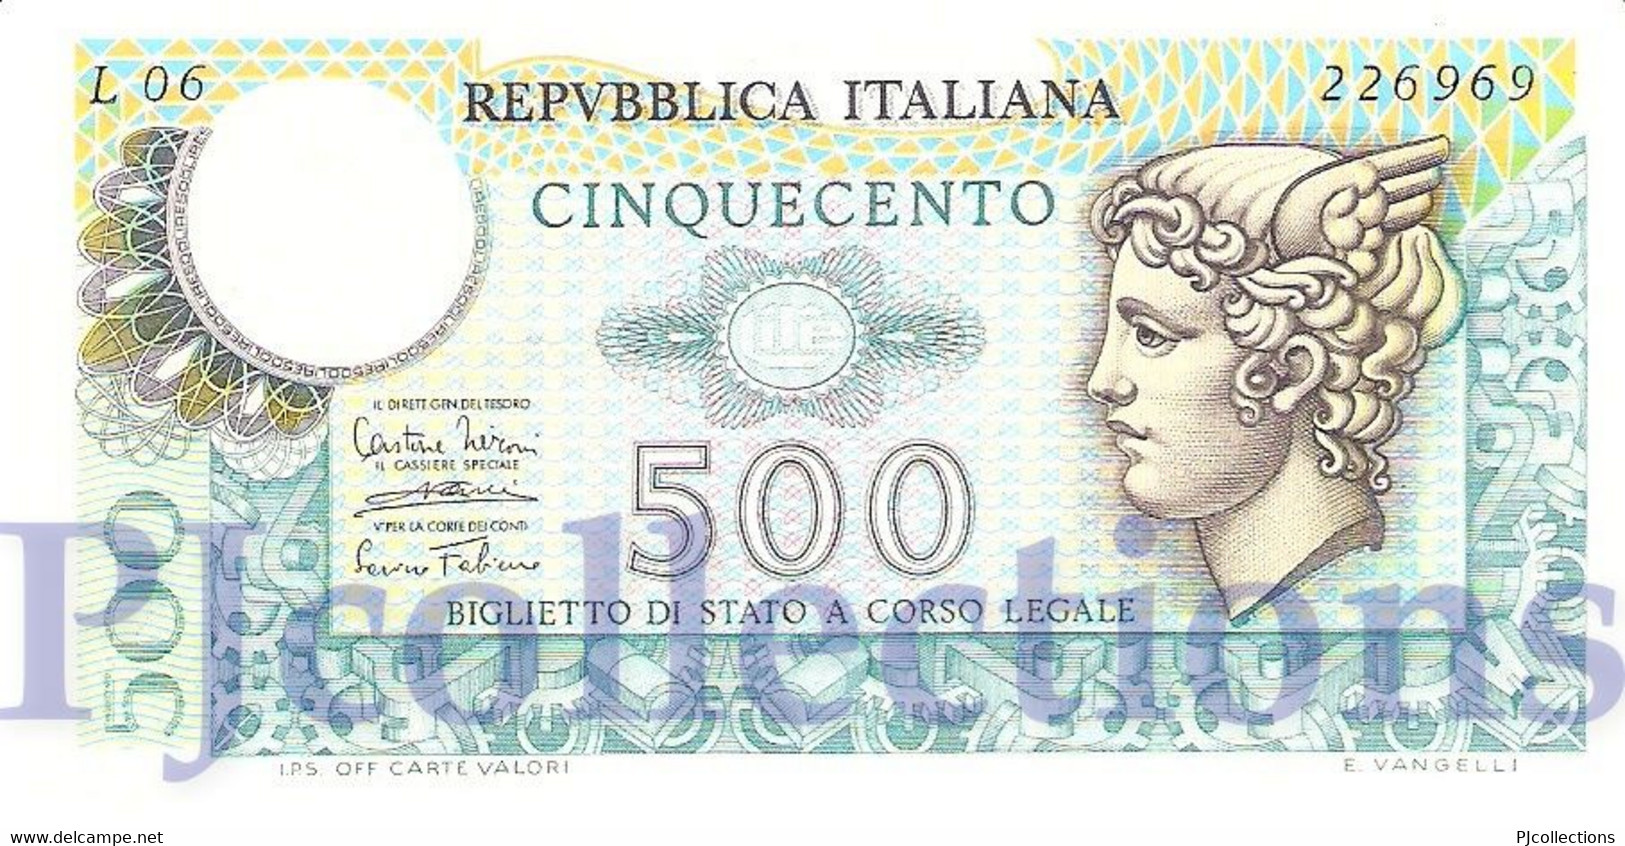 ITALIA - ITALY 500 LIRE 1974 PICK 94 UNC - 500 Liras